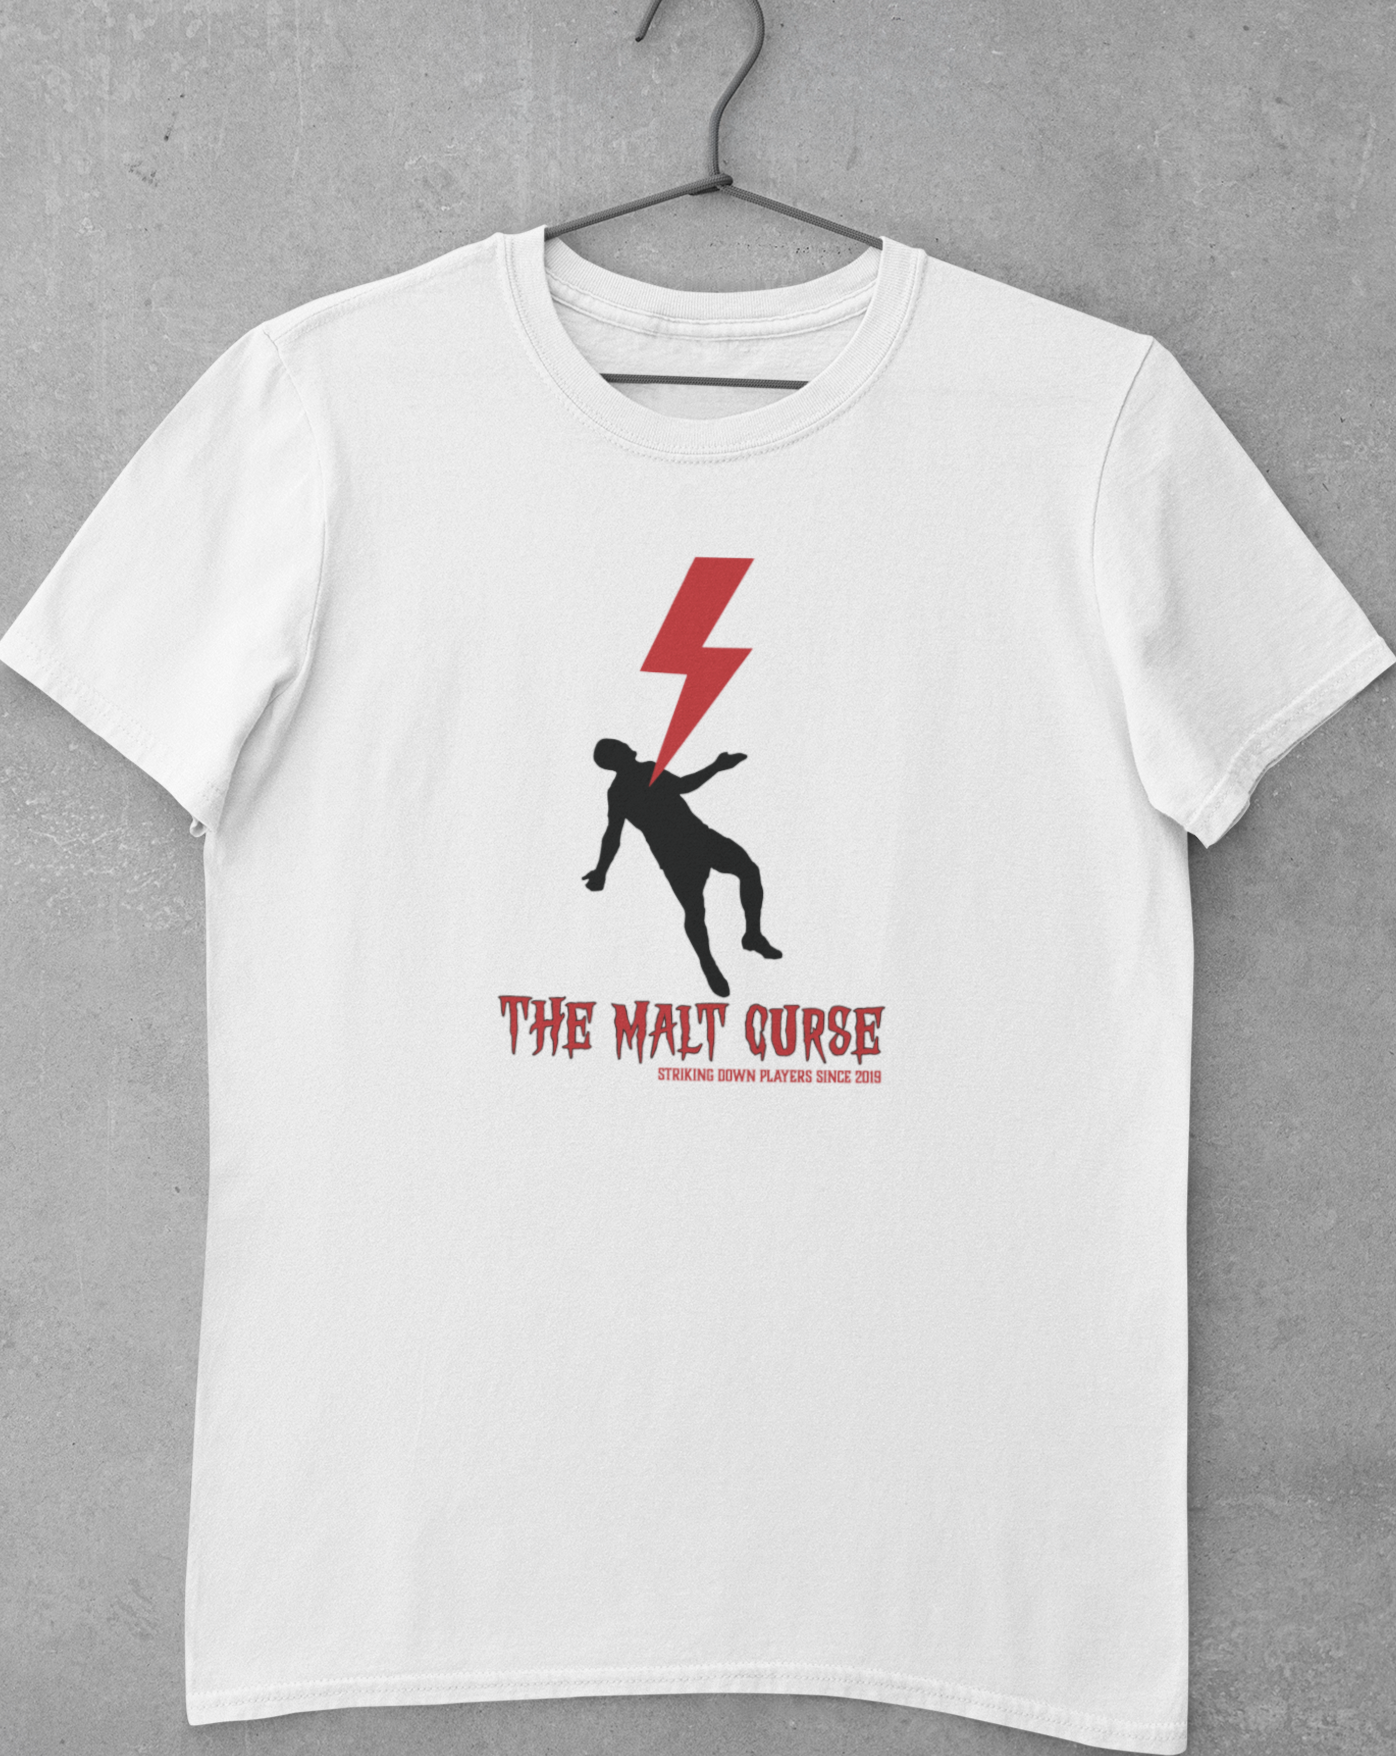 The Malt Curse T-shirt